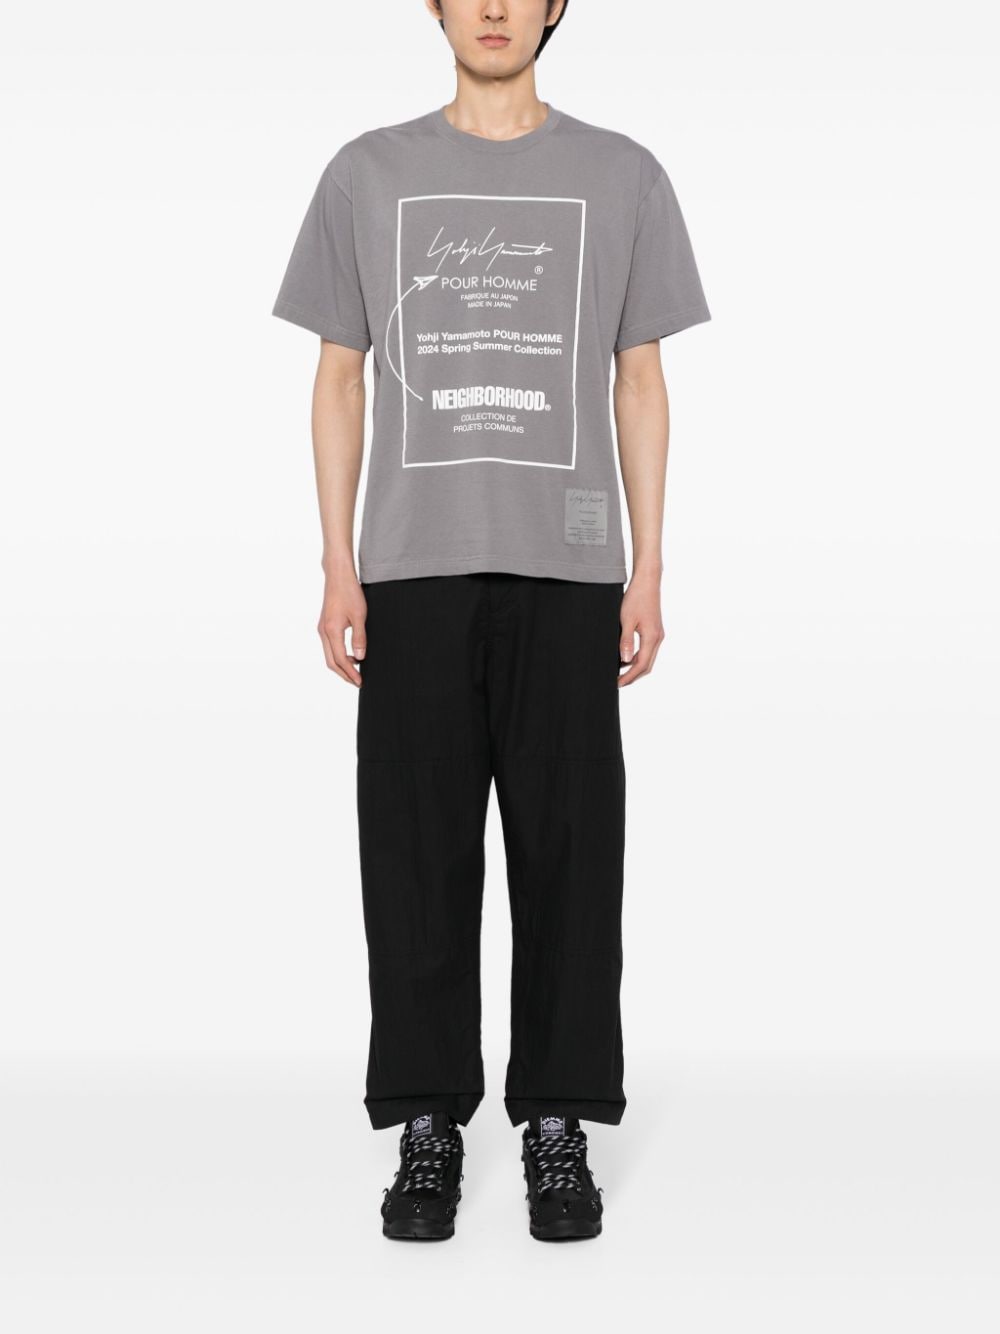 Yohji Yamamoto x NEIGHBORHOOD logo-print cotton T-shirt - Grijs